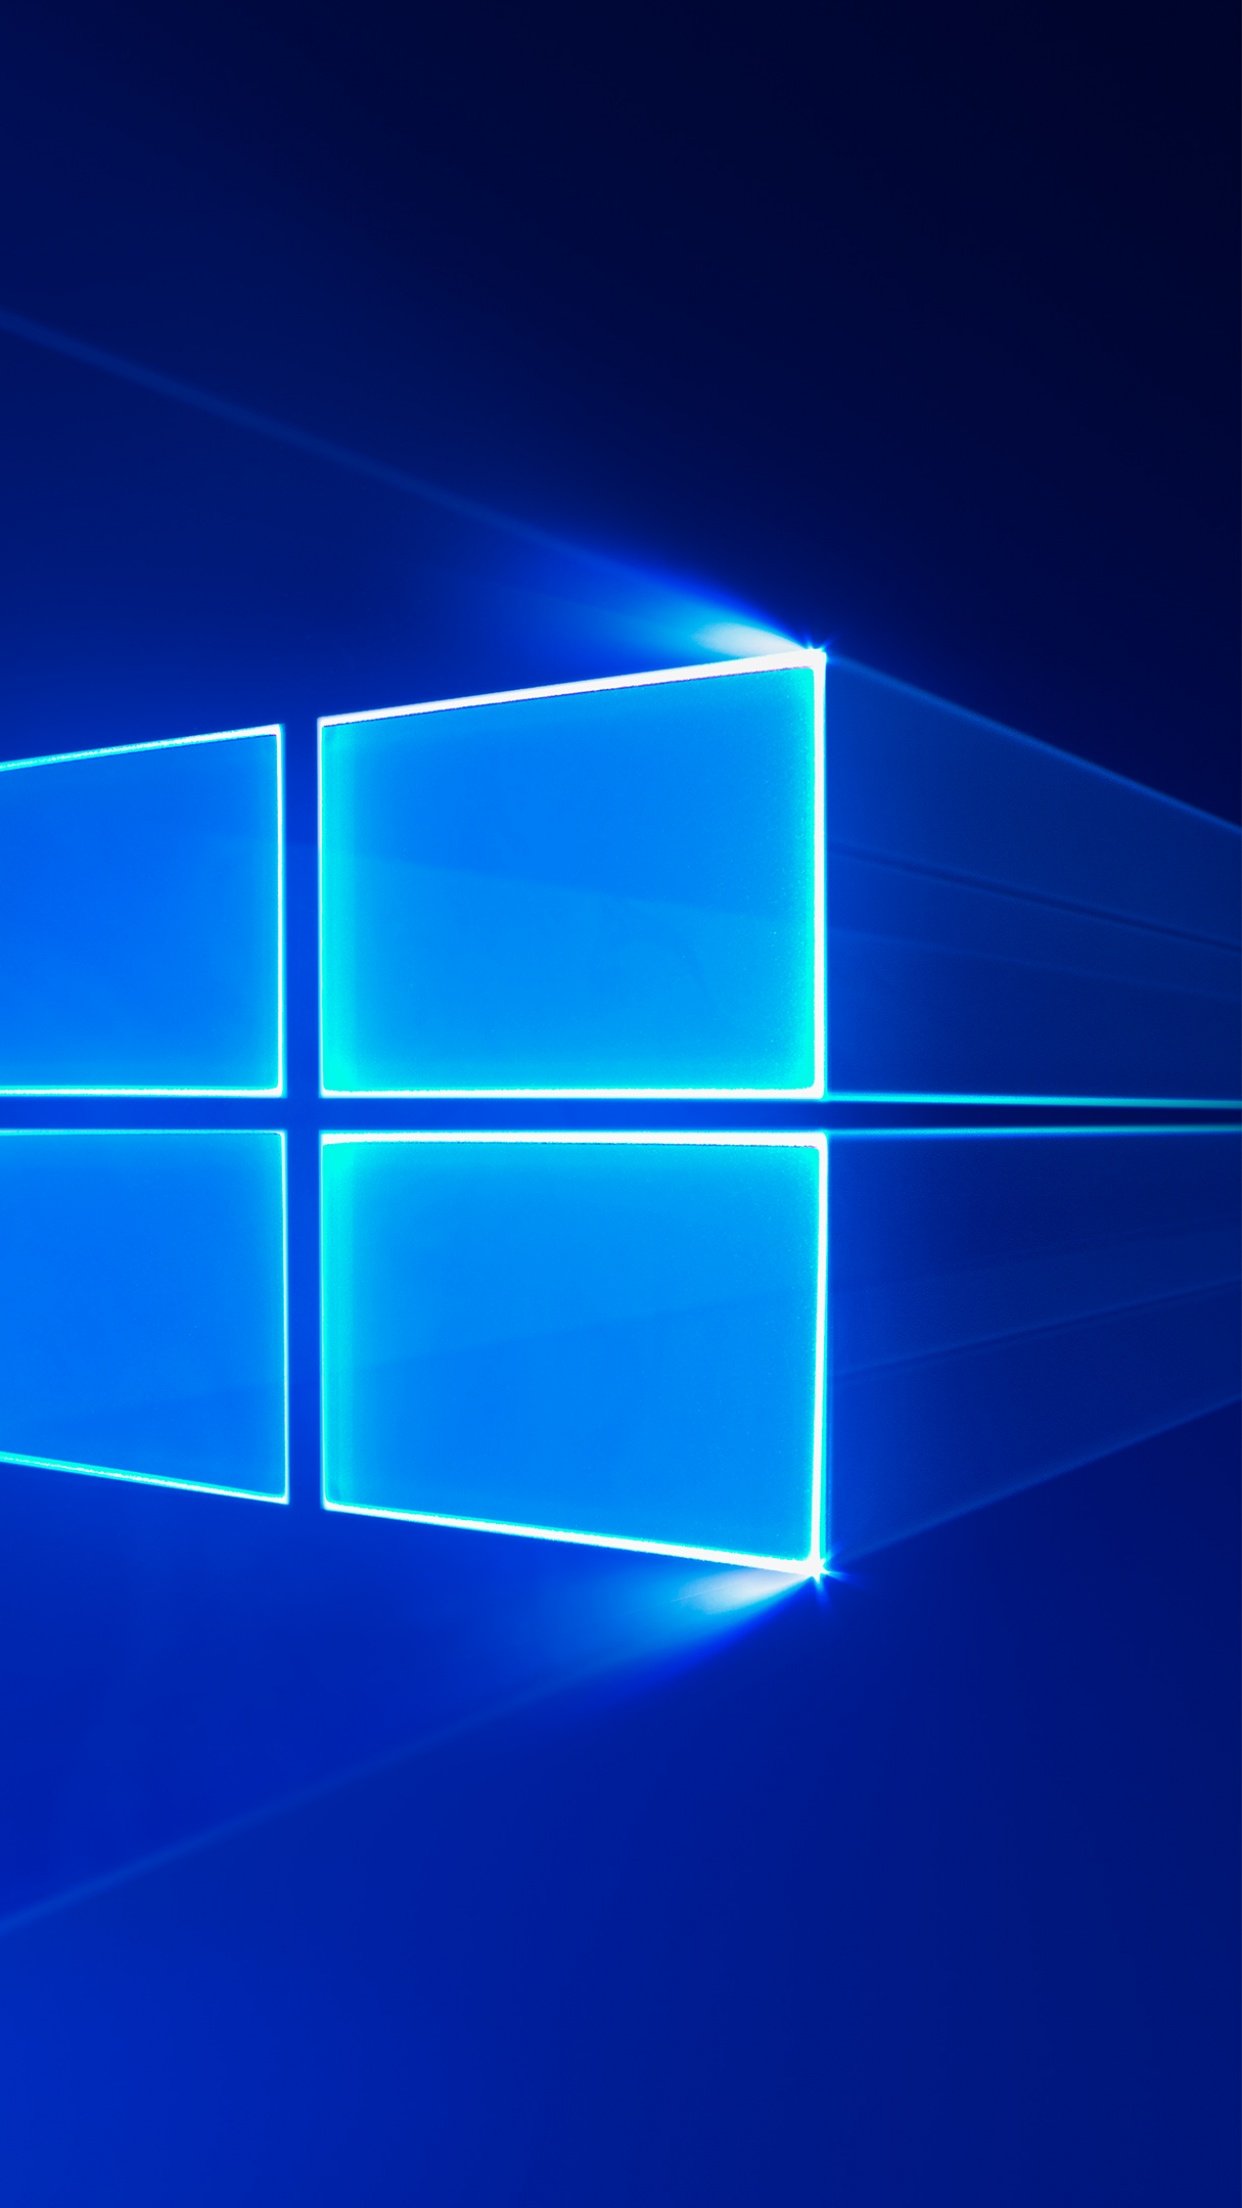 Windows 10 Wallpaper 4K, Microsoft Windows, Blue, Glossy, Blue background, Technology